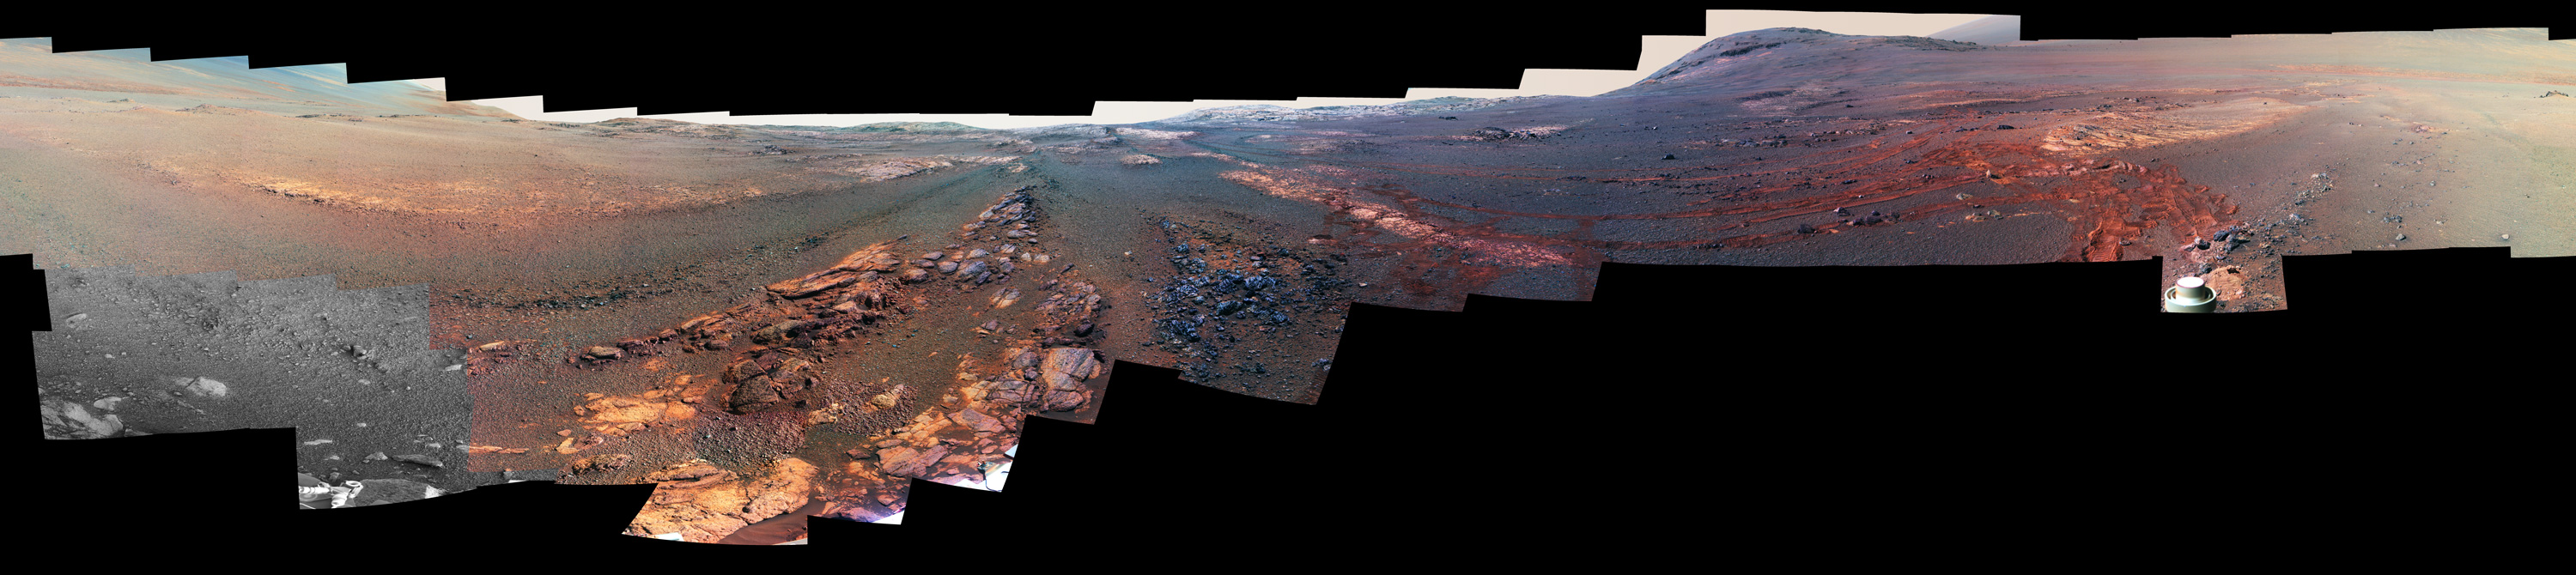 Unlabeled terrain on Mars.